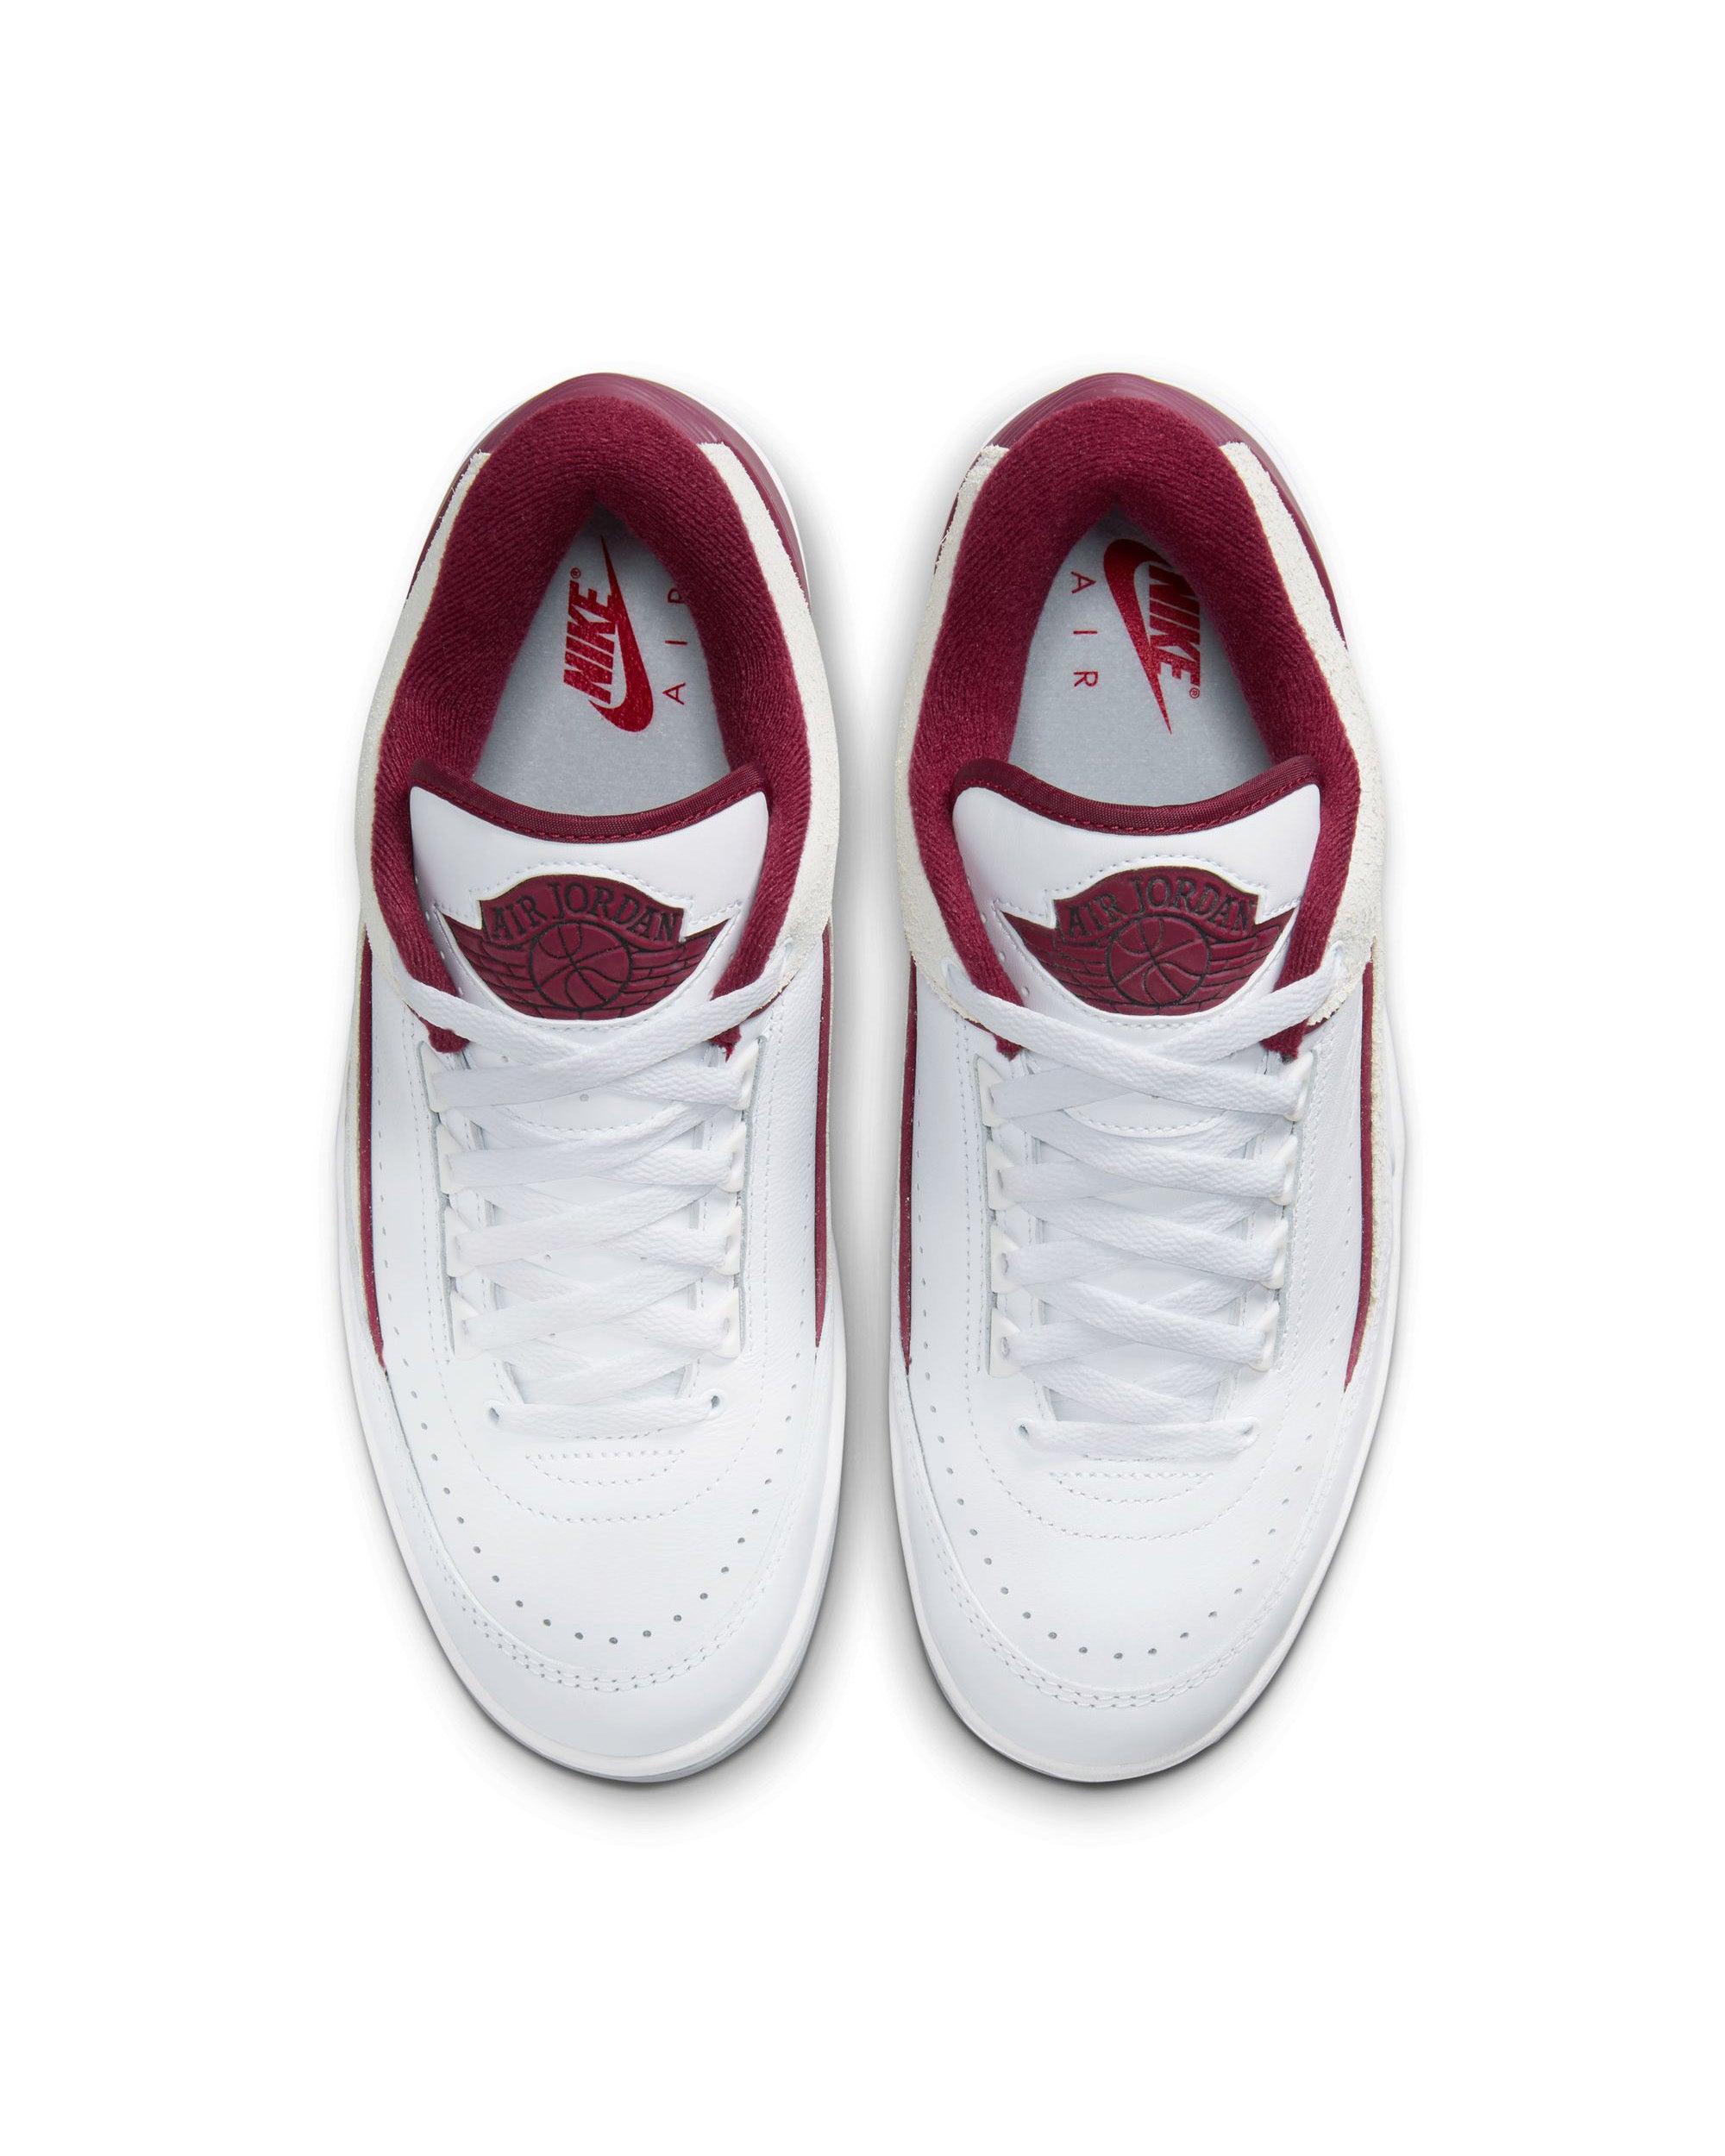 Air Jordan 2 Retro Low - White / Cherrywood Red